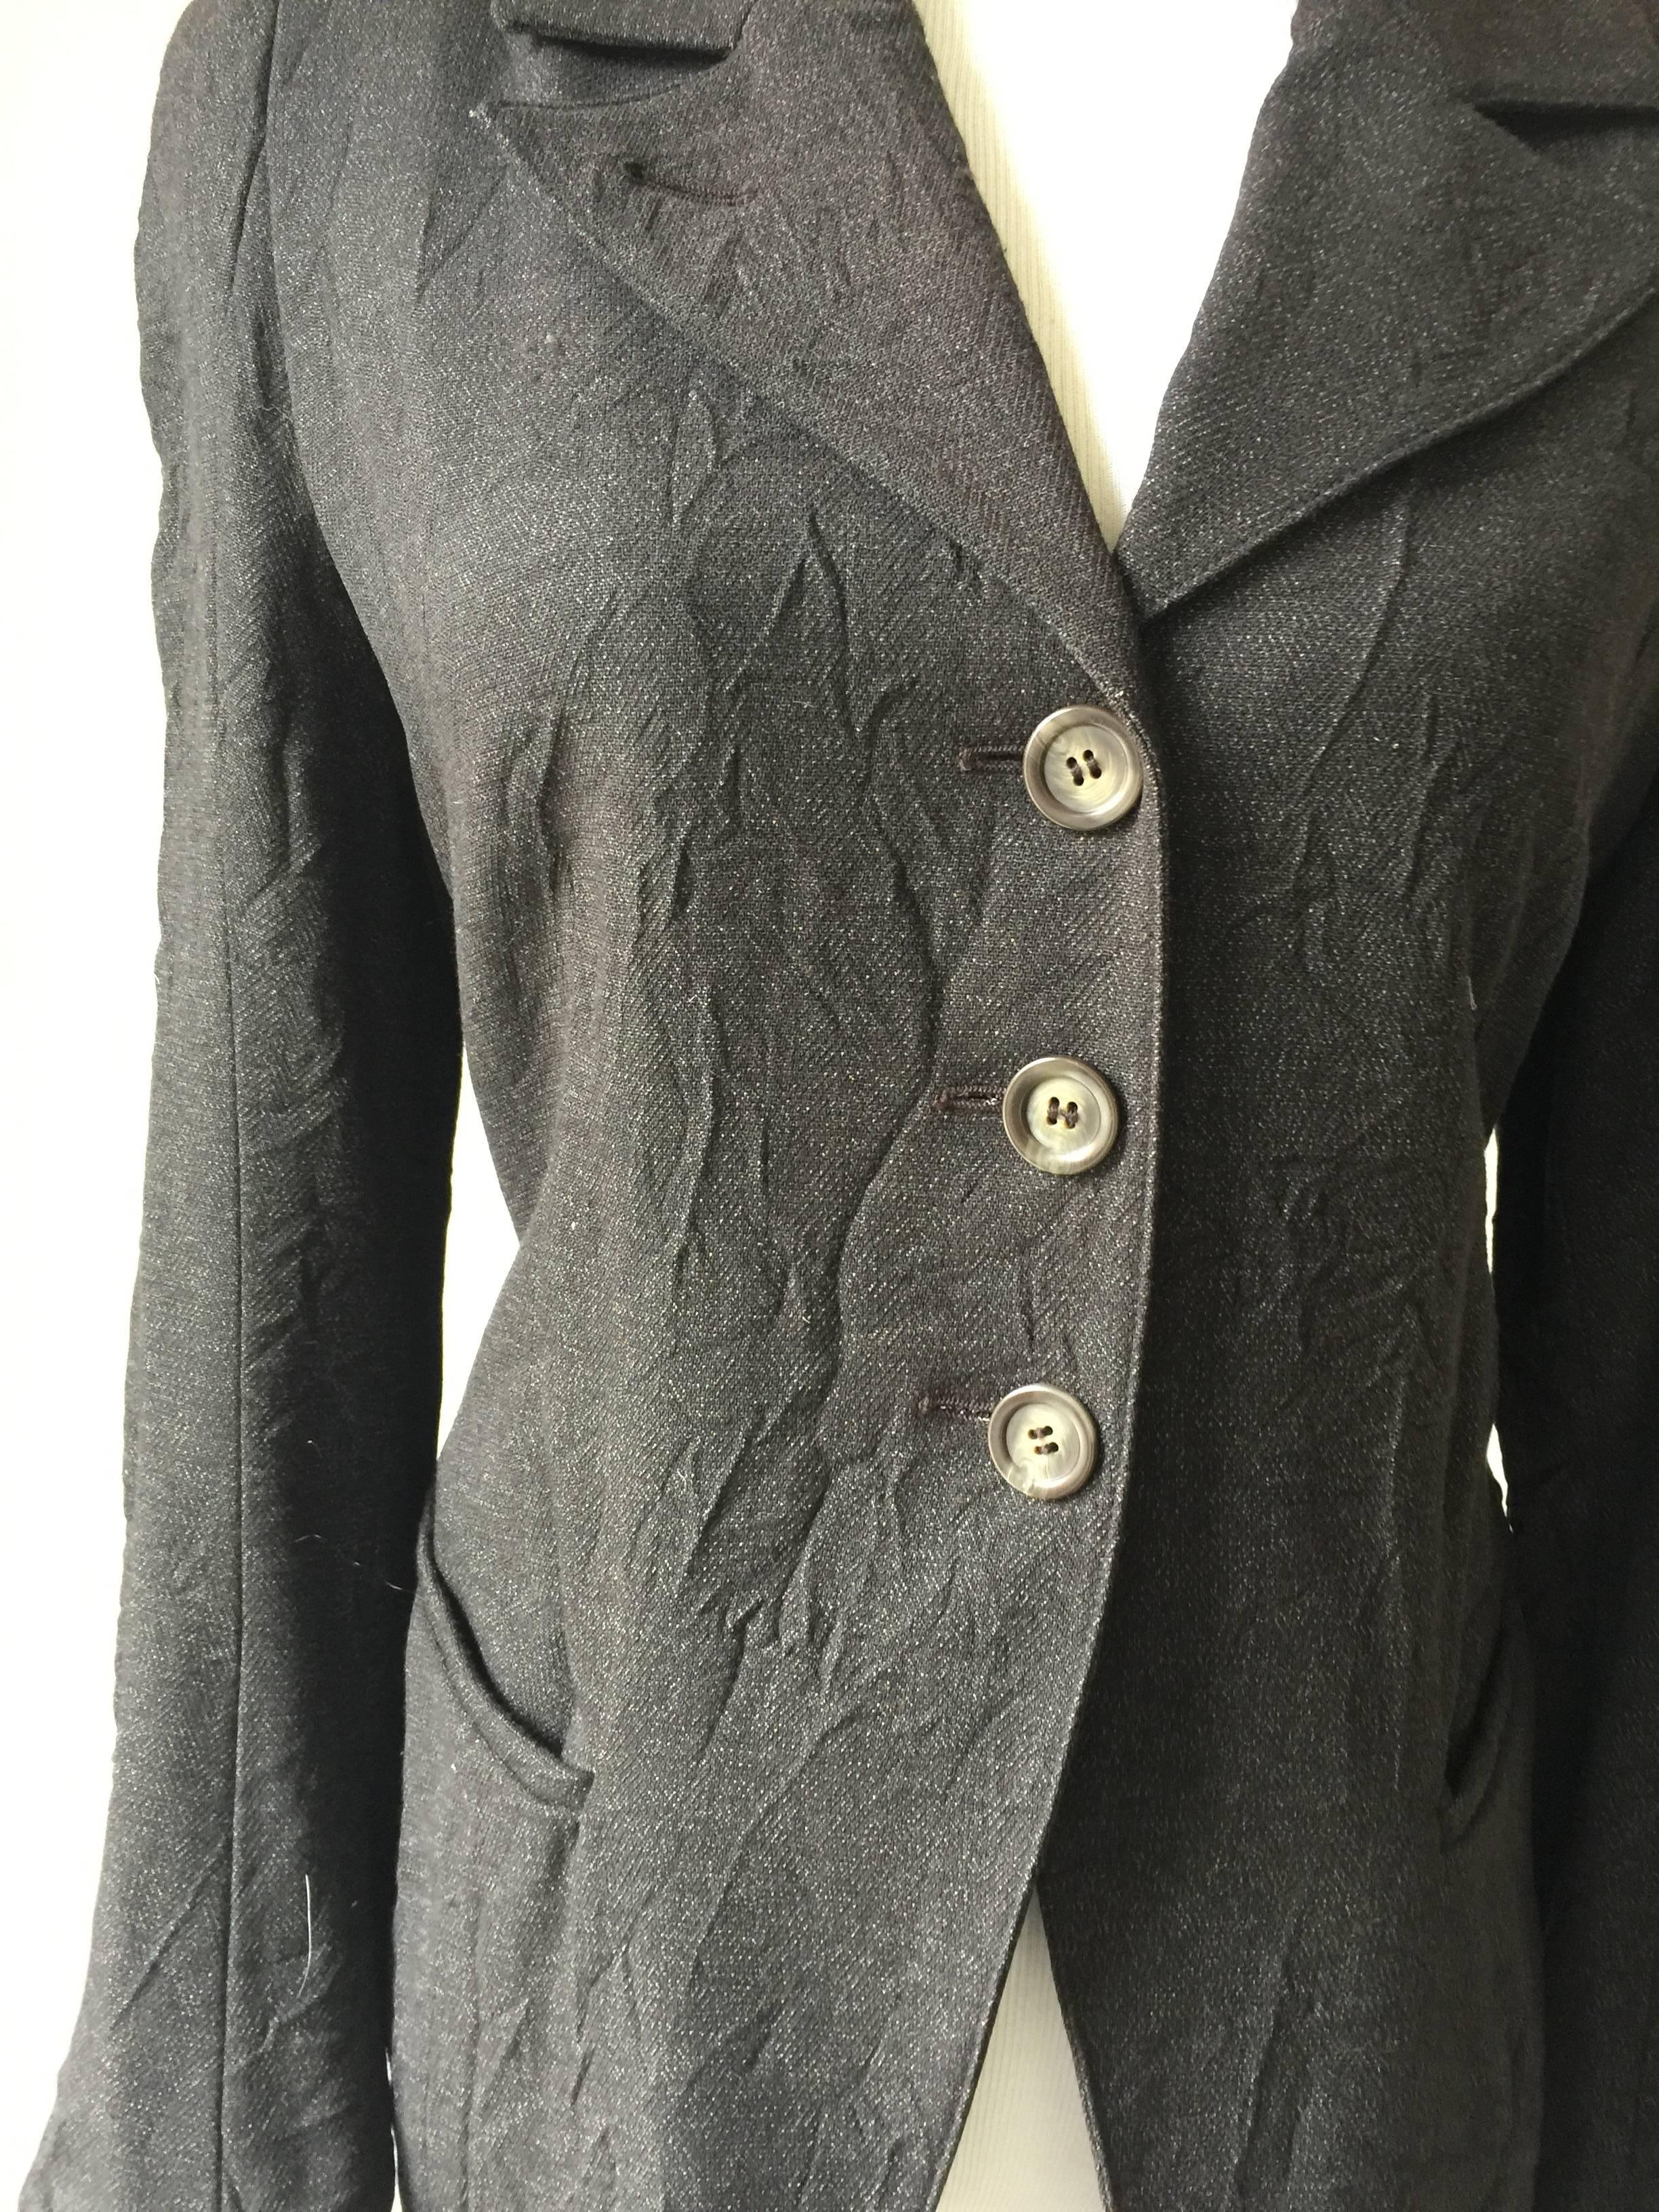 Black Ann Demeulemeester Crinkled Wool Jacket 38